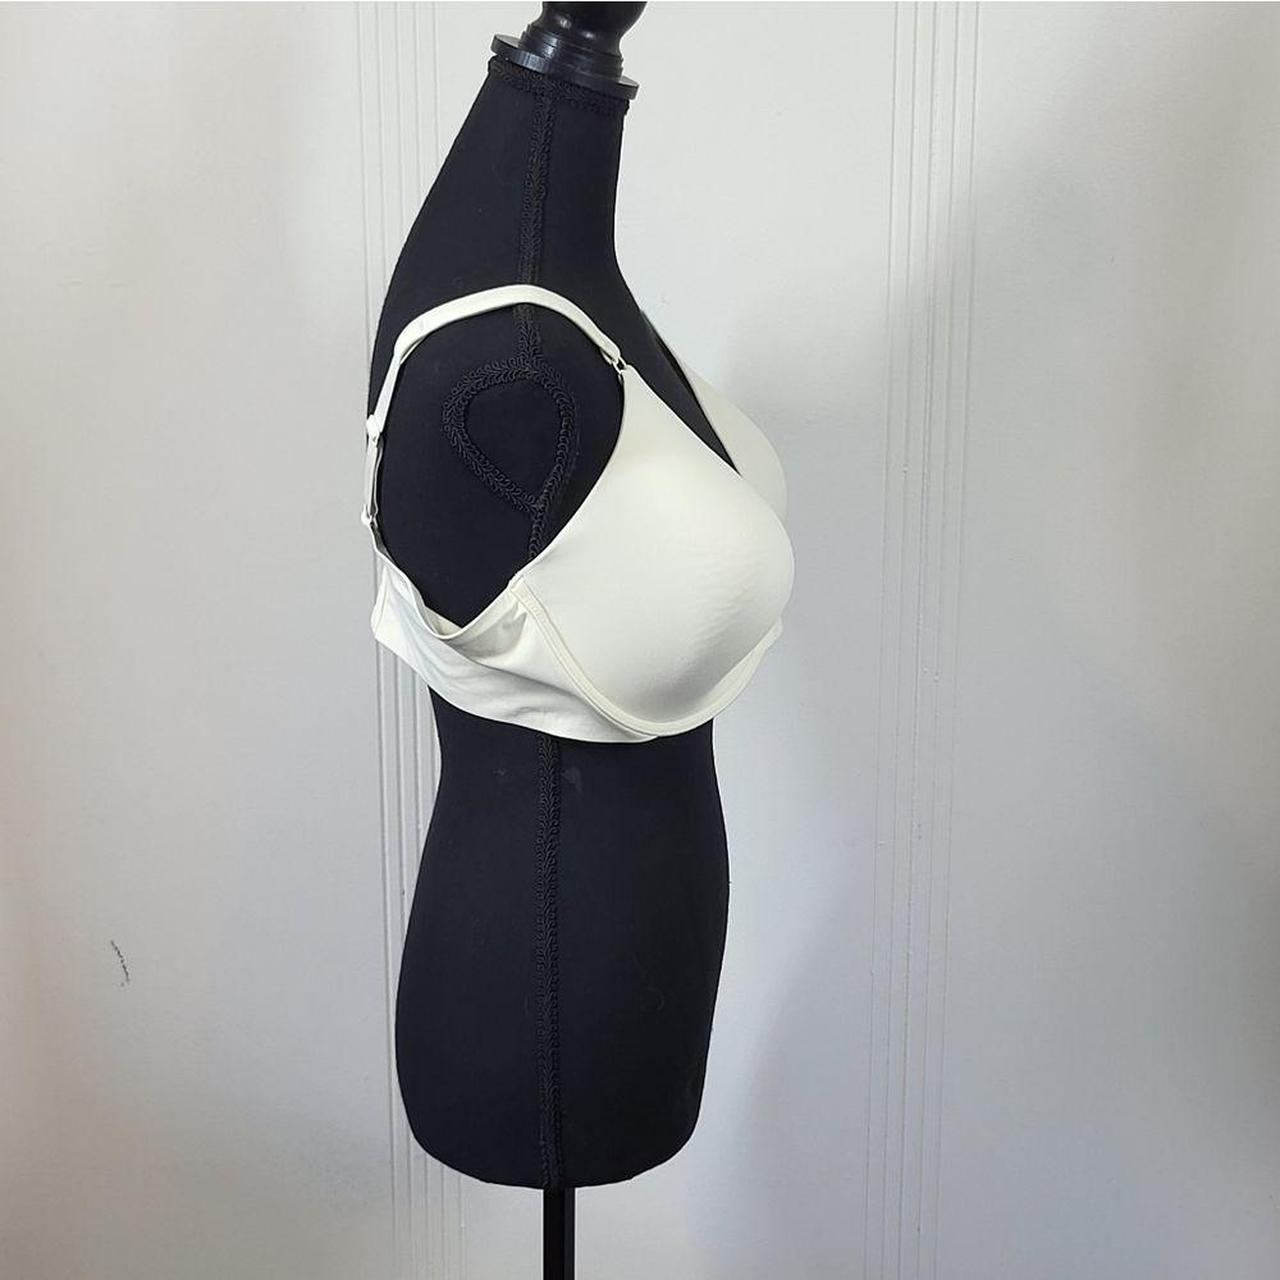 Product Image 2 - Olga bra. Size 40DD. EXCELLENT